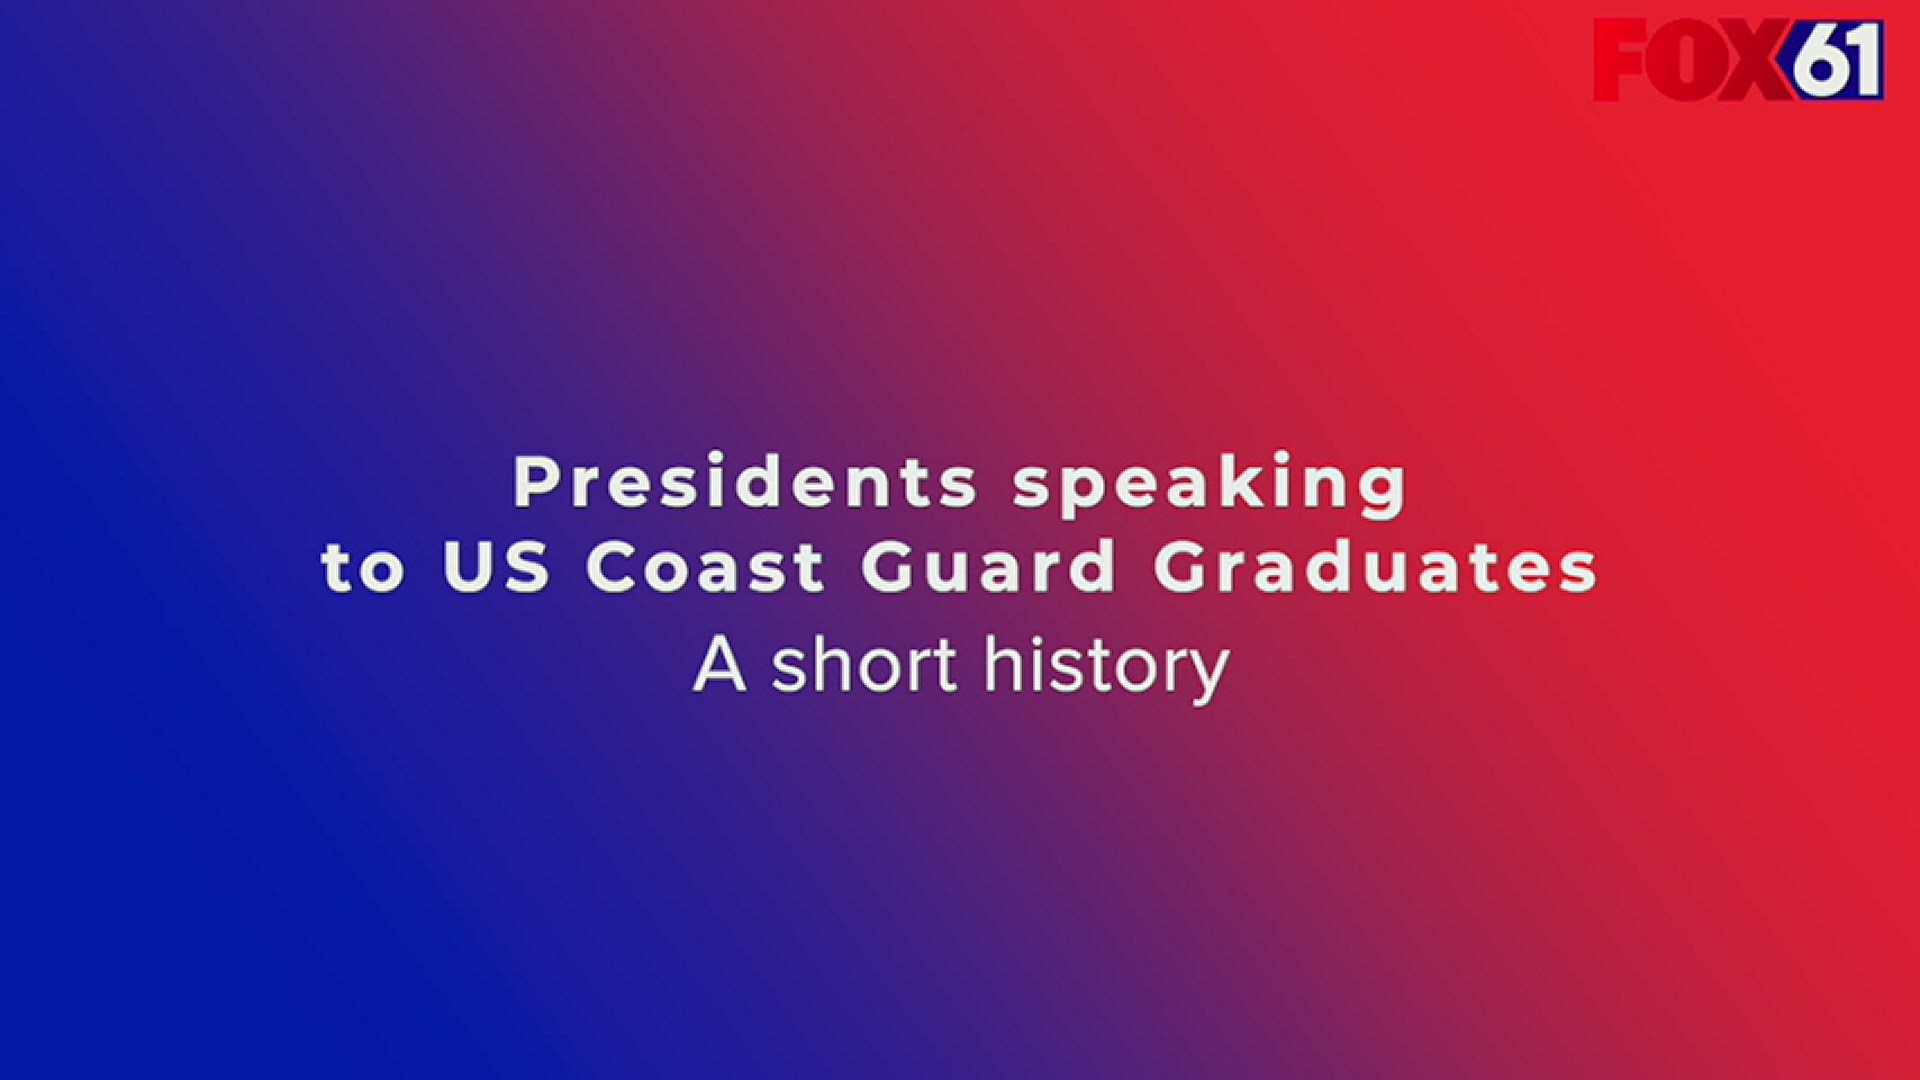 Biden spoke to graduates at USCGA when he was Vice President in 2013